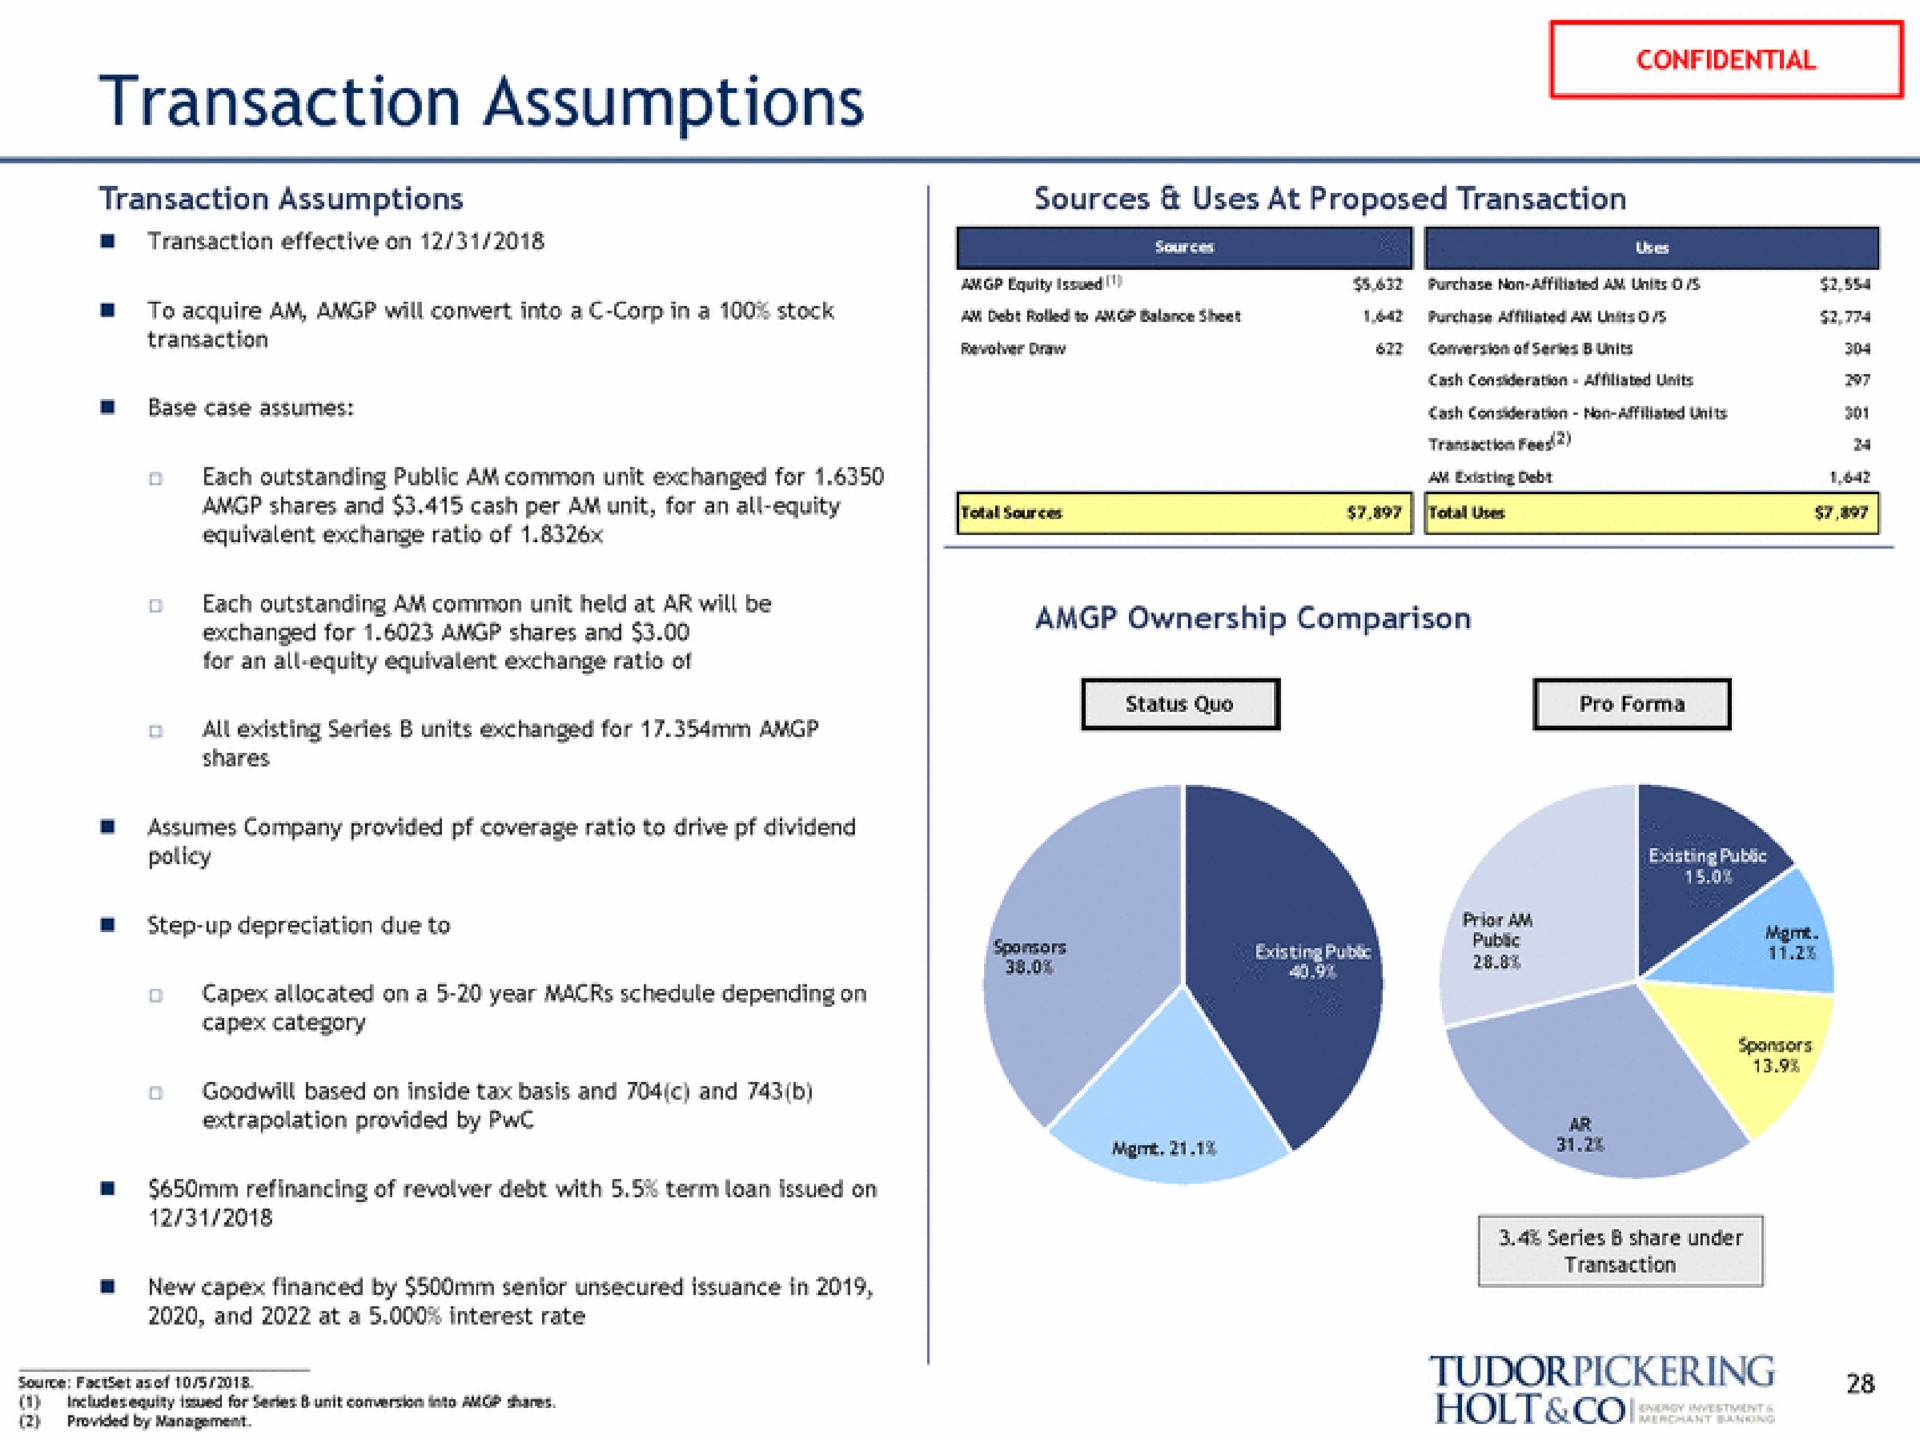 transaction assumptions holt | Tudor, Pickering, Holt & Co